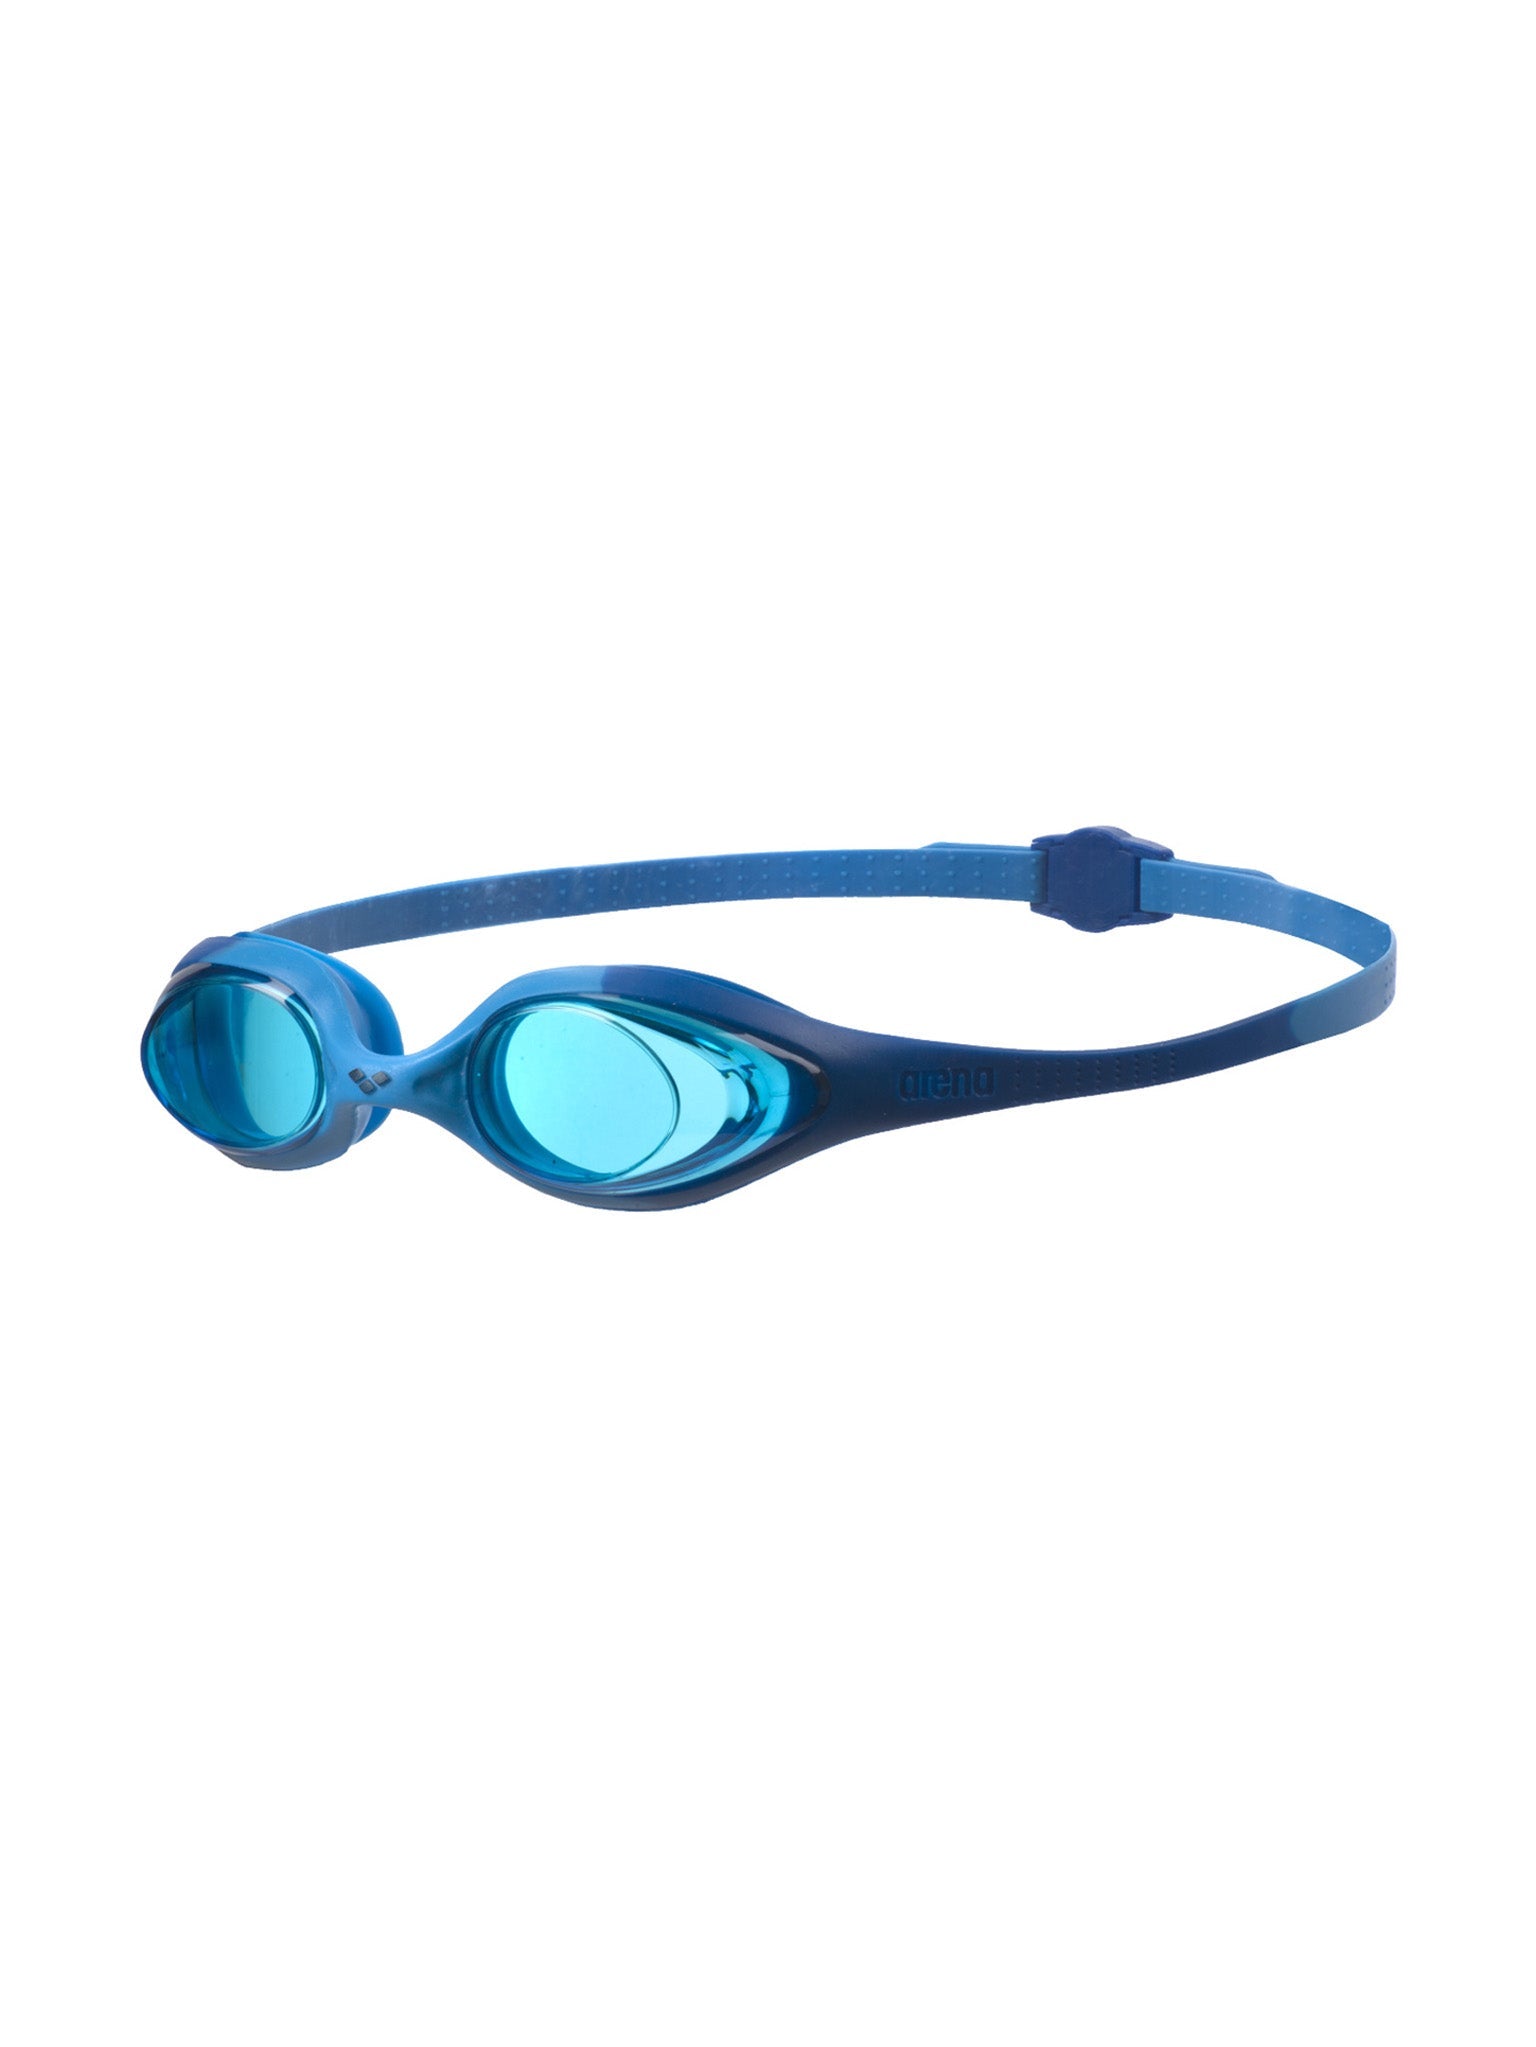 Lunettes de natation Spider Junior - Bleu/Bleu